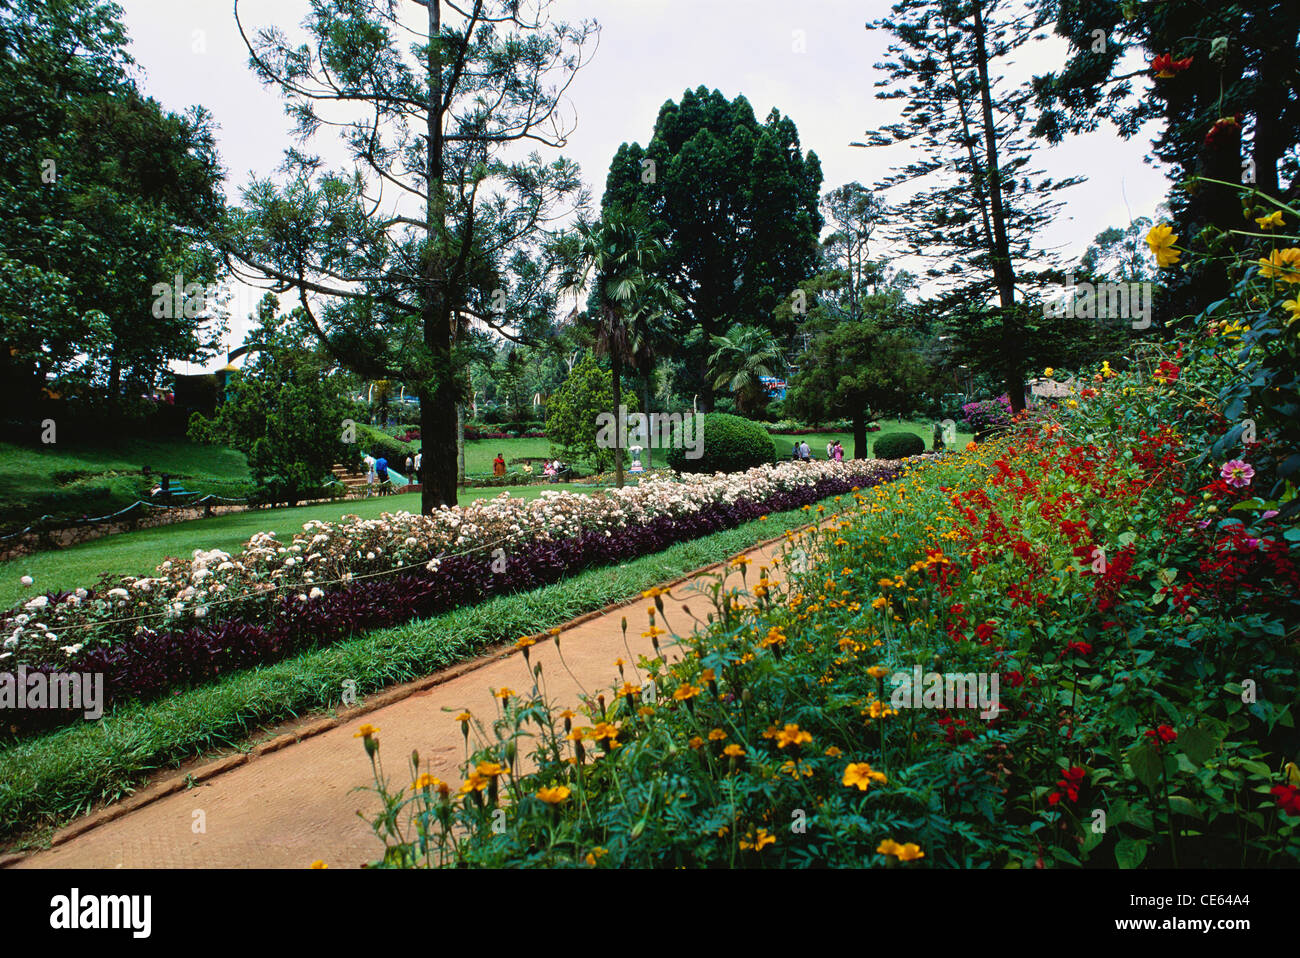 Sim's park garden flower beds trees walking path Coonoor Tamil Nadu India Stock Photo